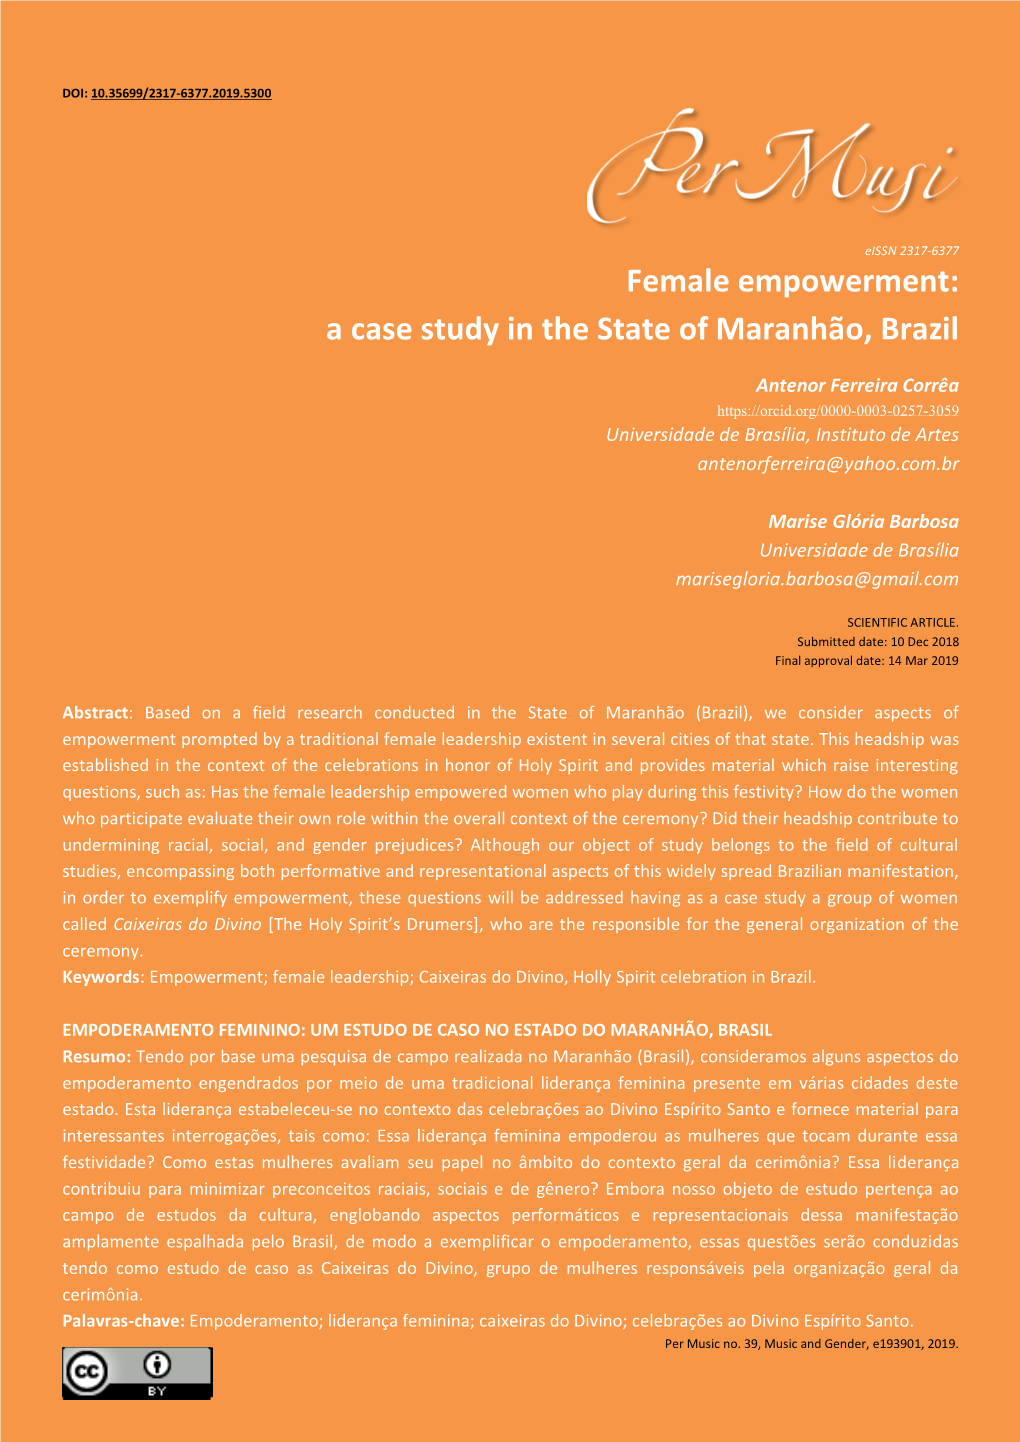 Female Empowerment: a Case Study in the State of Maranhão, Brazil